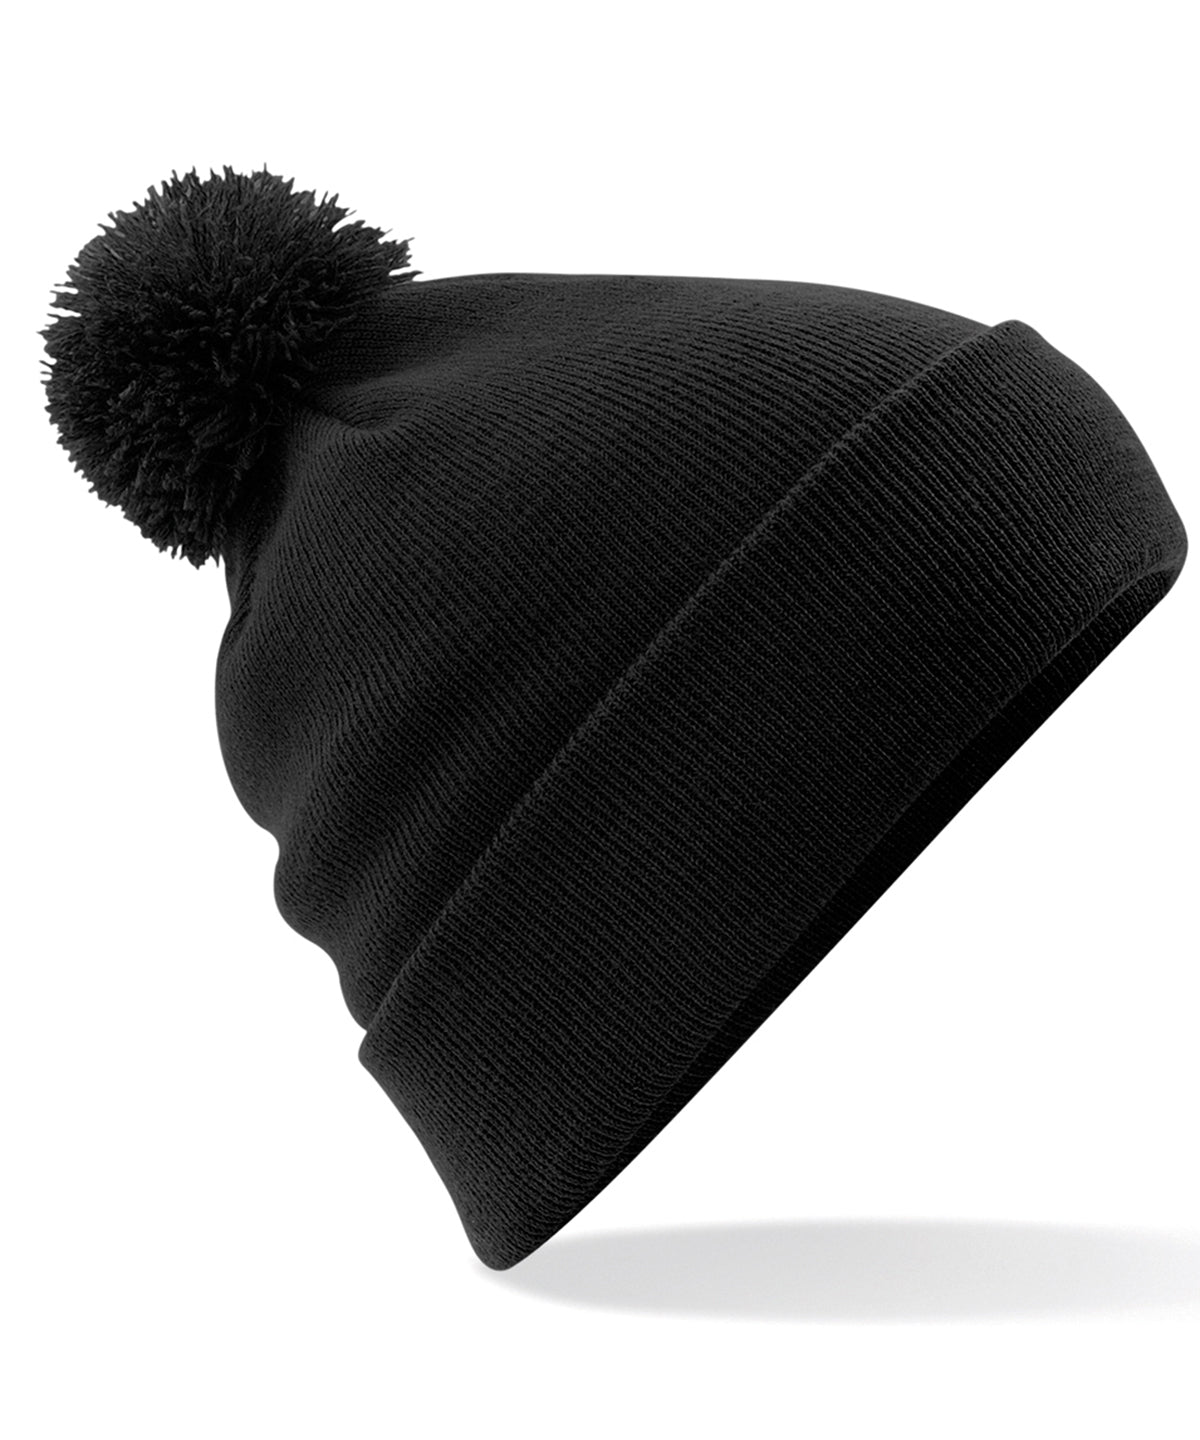 Personalised Hats - Black Beechfield Original pom pom beanie